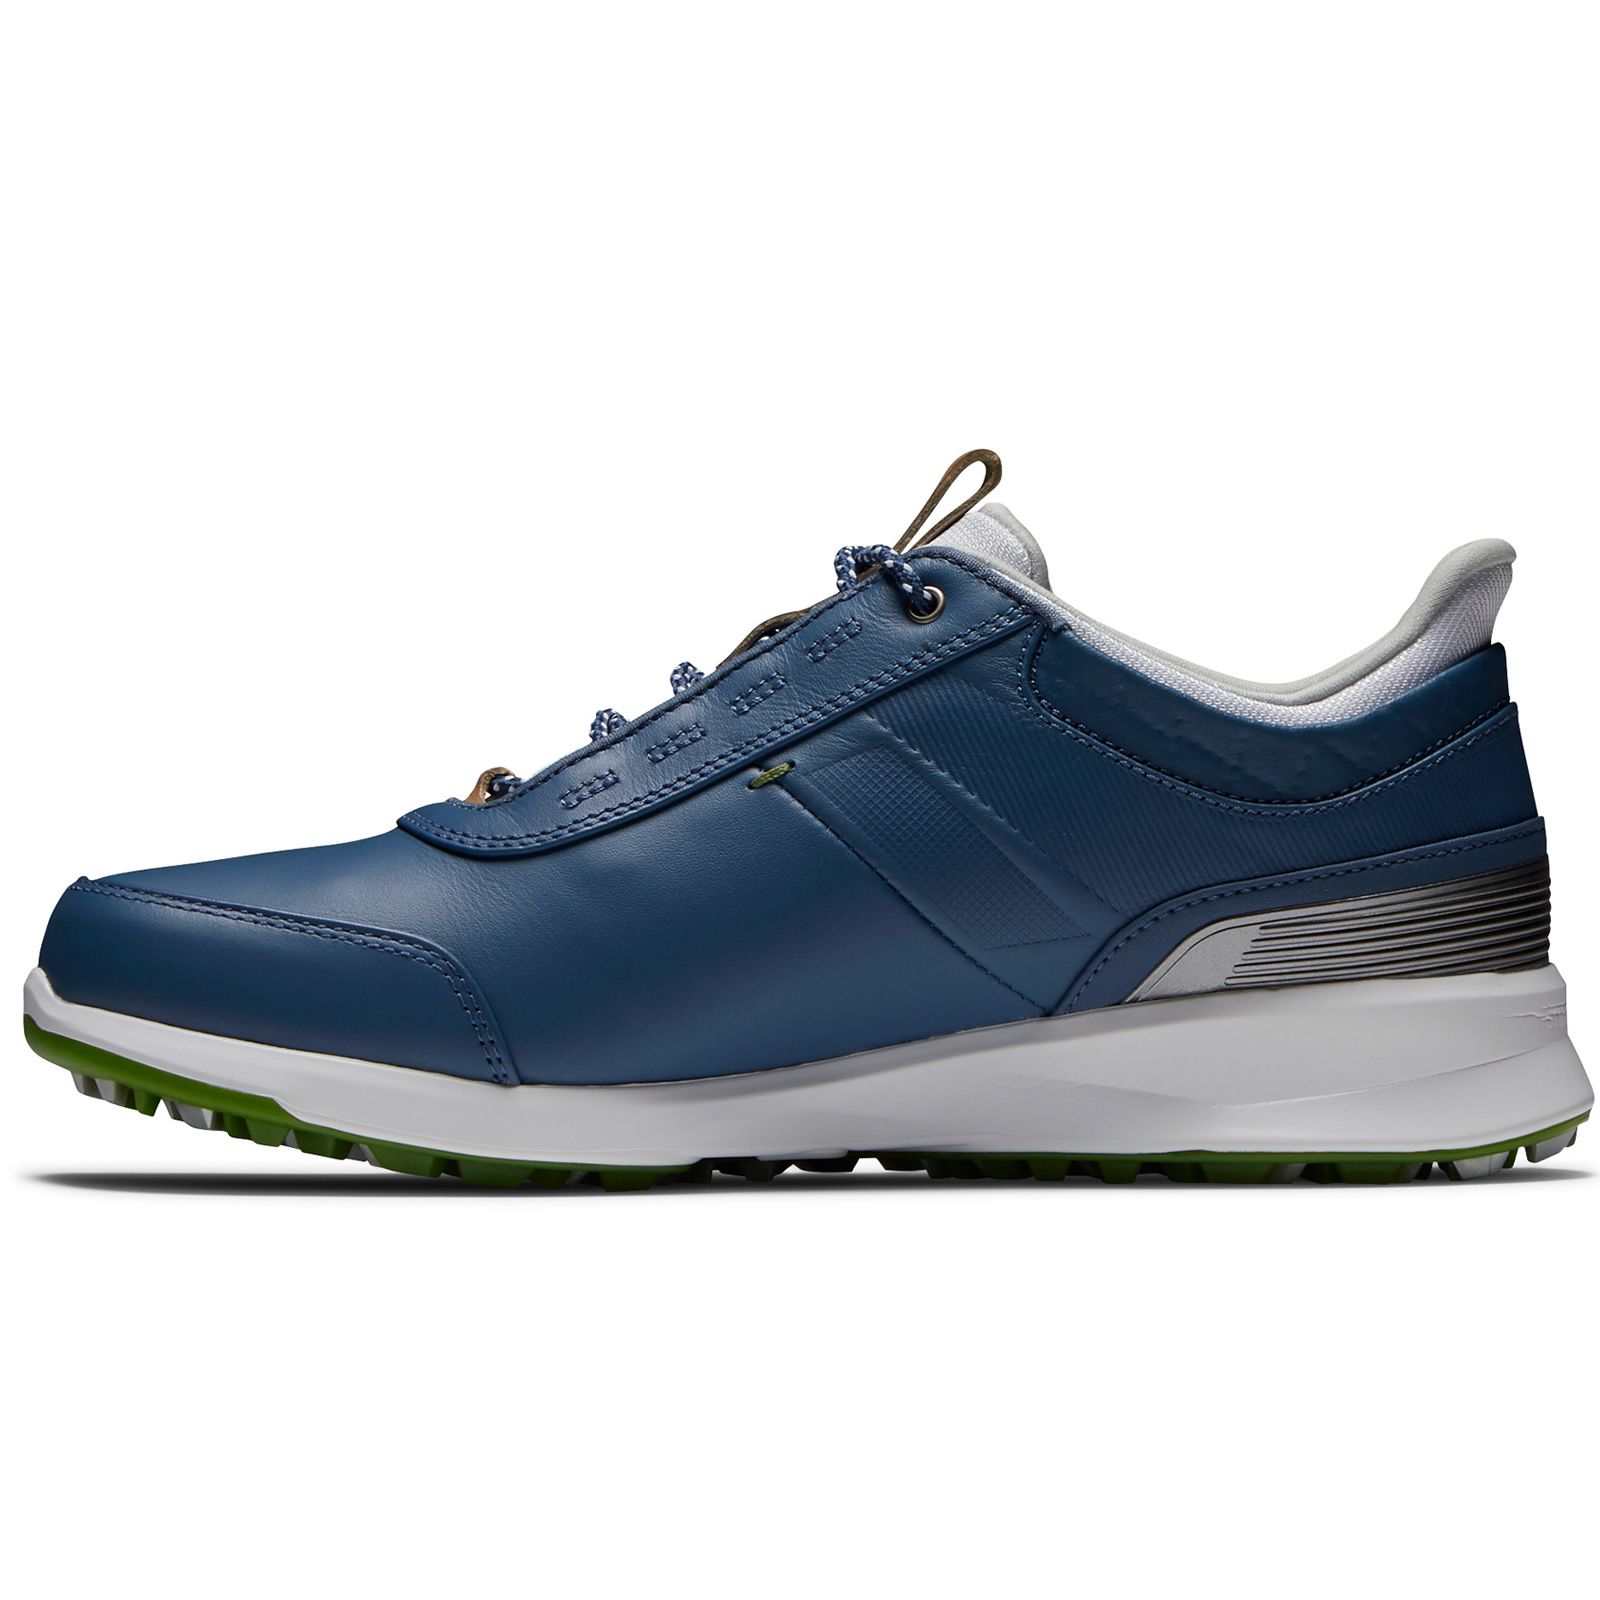 FootJoy FJ Stratos Ladies Golf Shoes #90112 Blue/Green | Scottsdale Golf